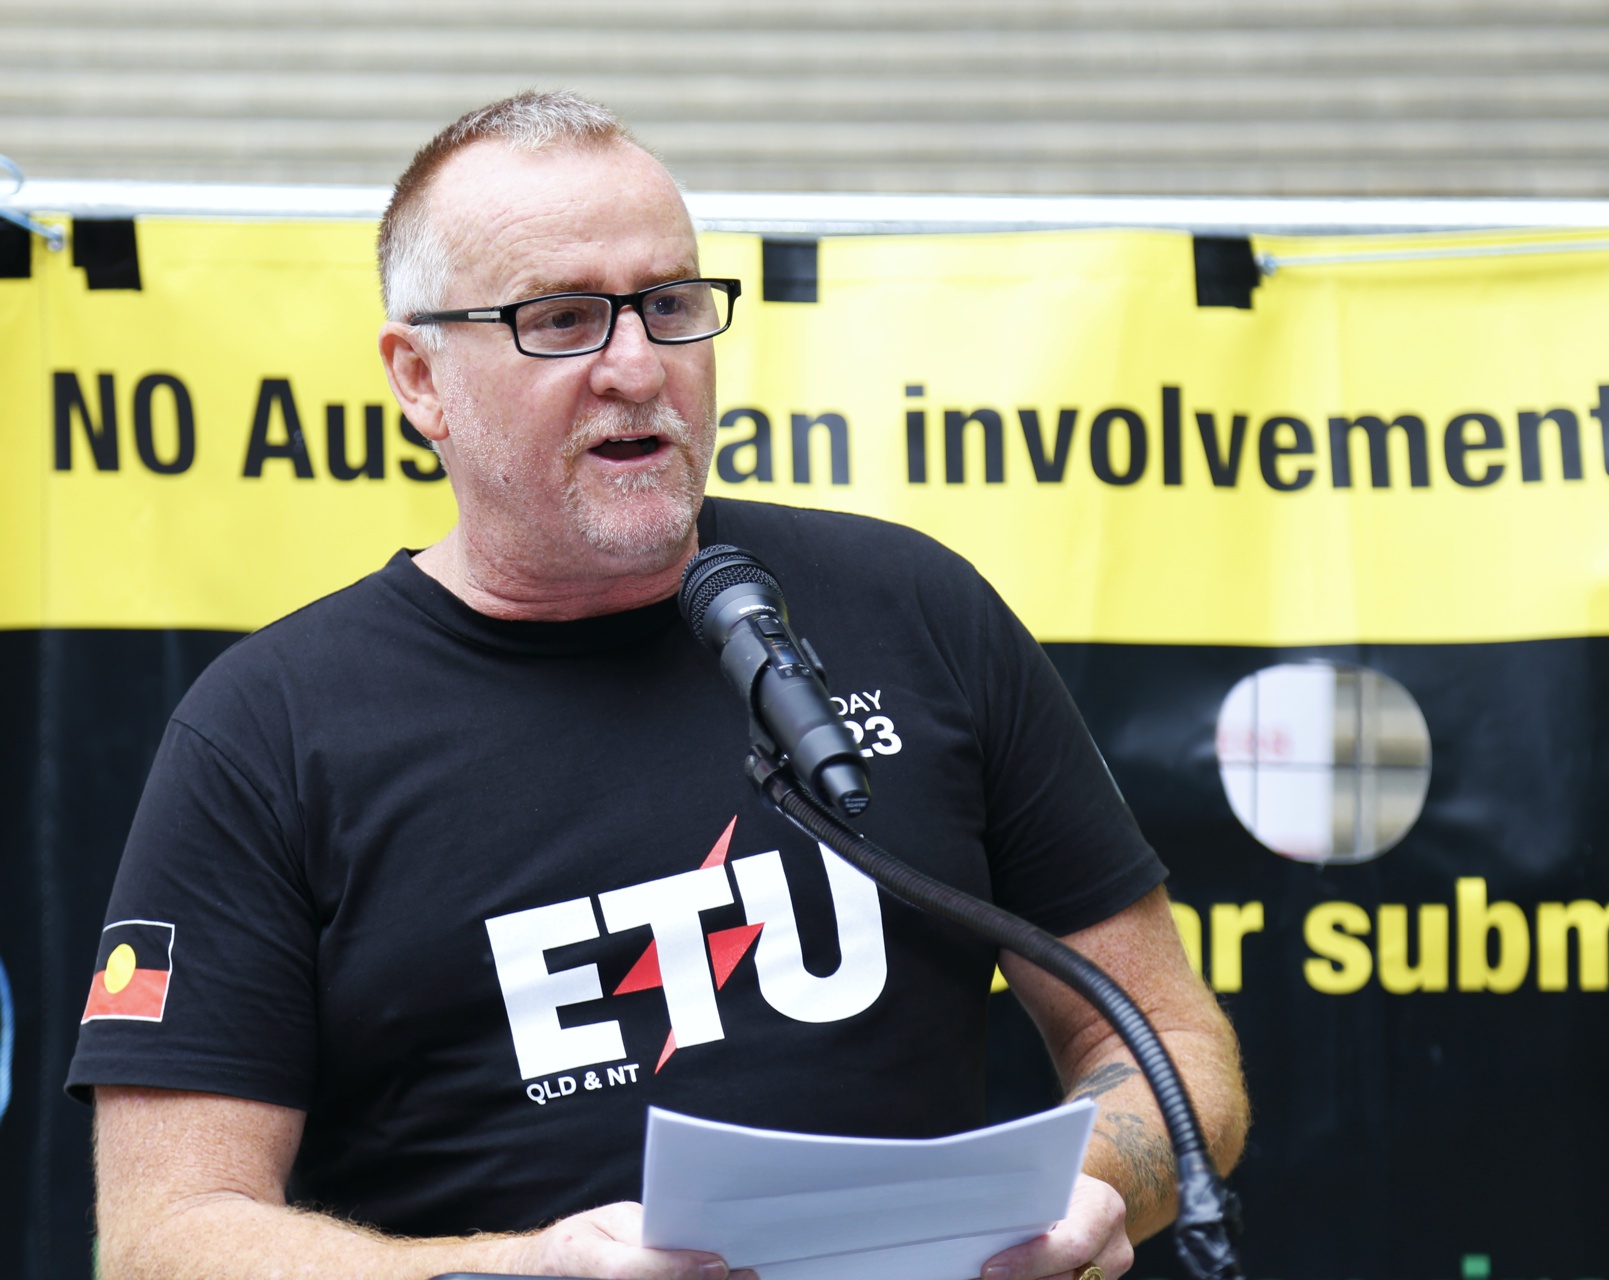 ETU leader Peter Ong speaks against AUKUS